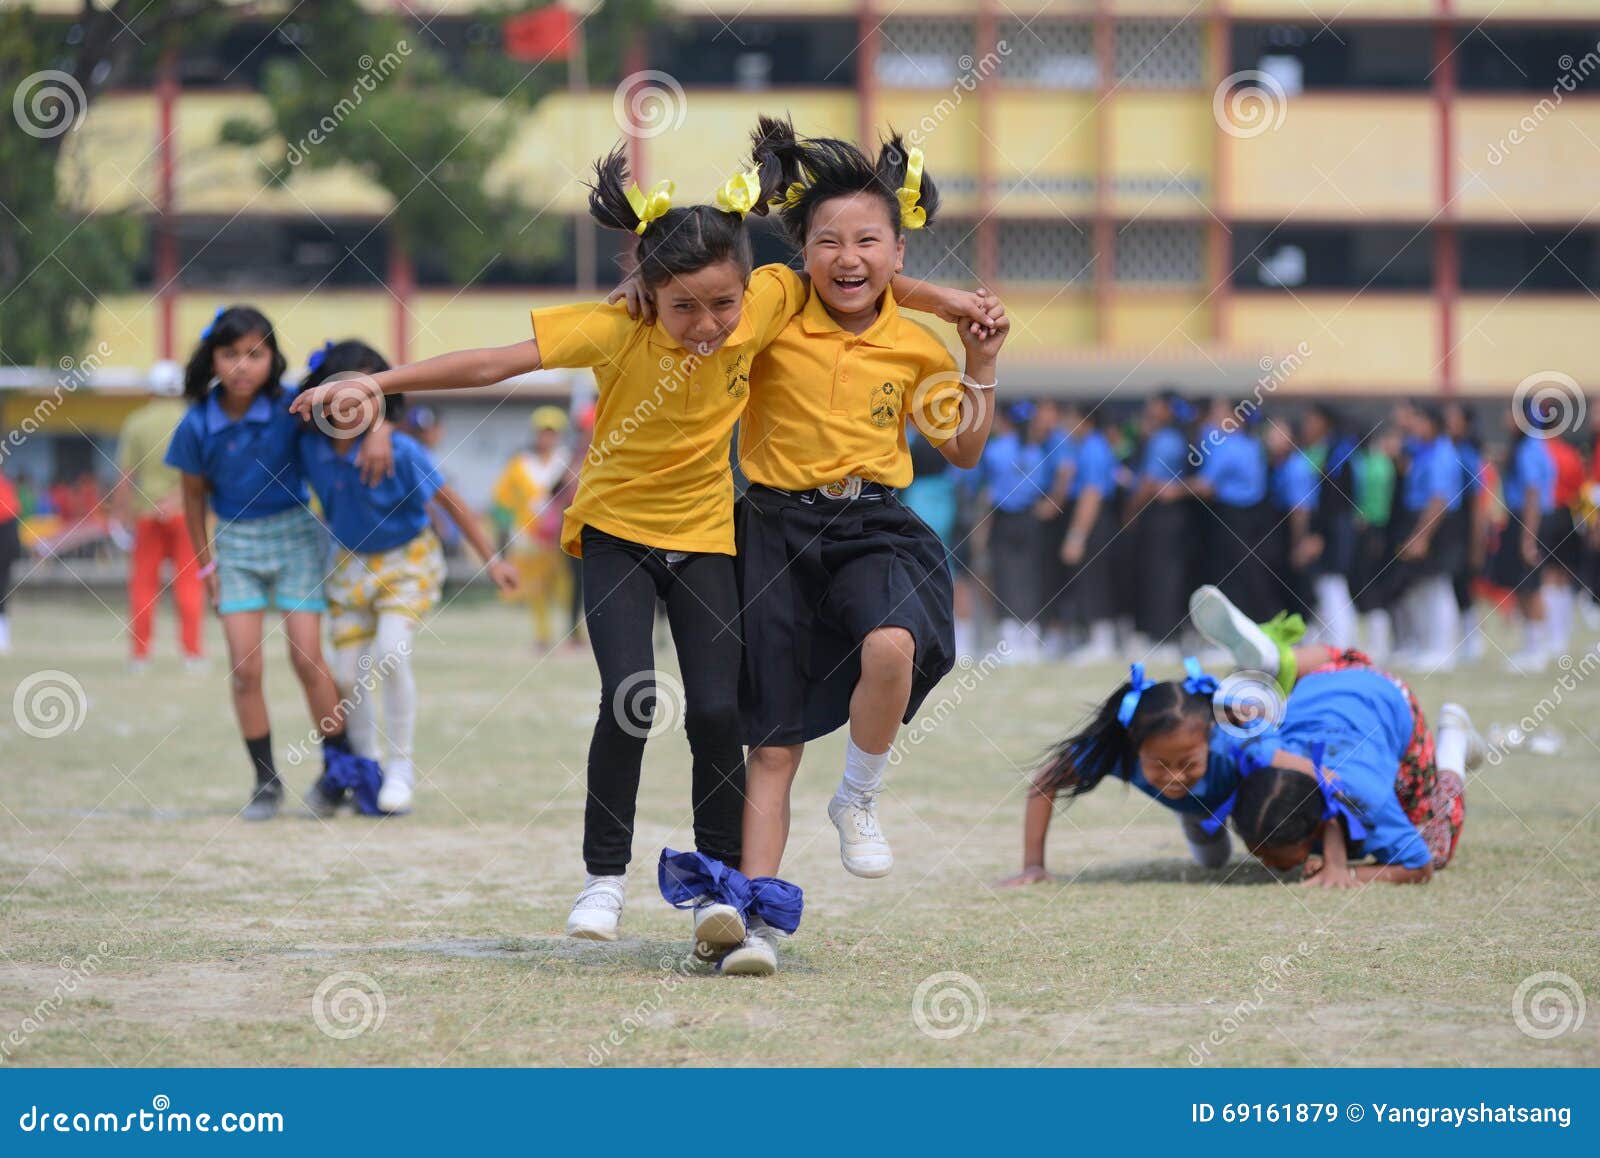 school children compete in three legged race